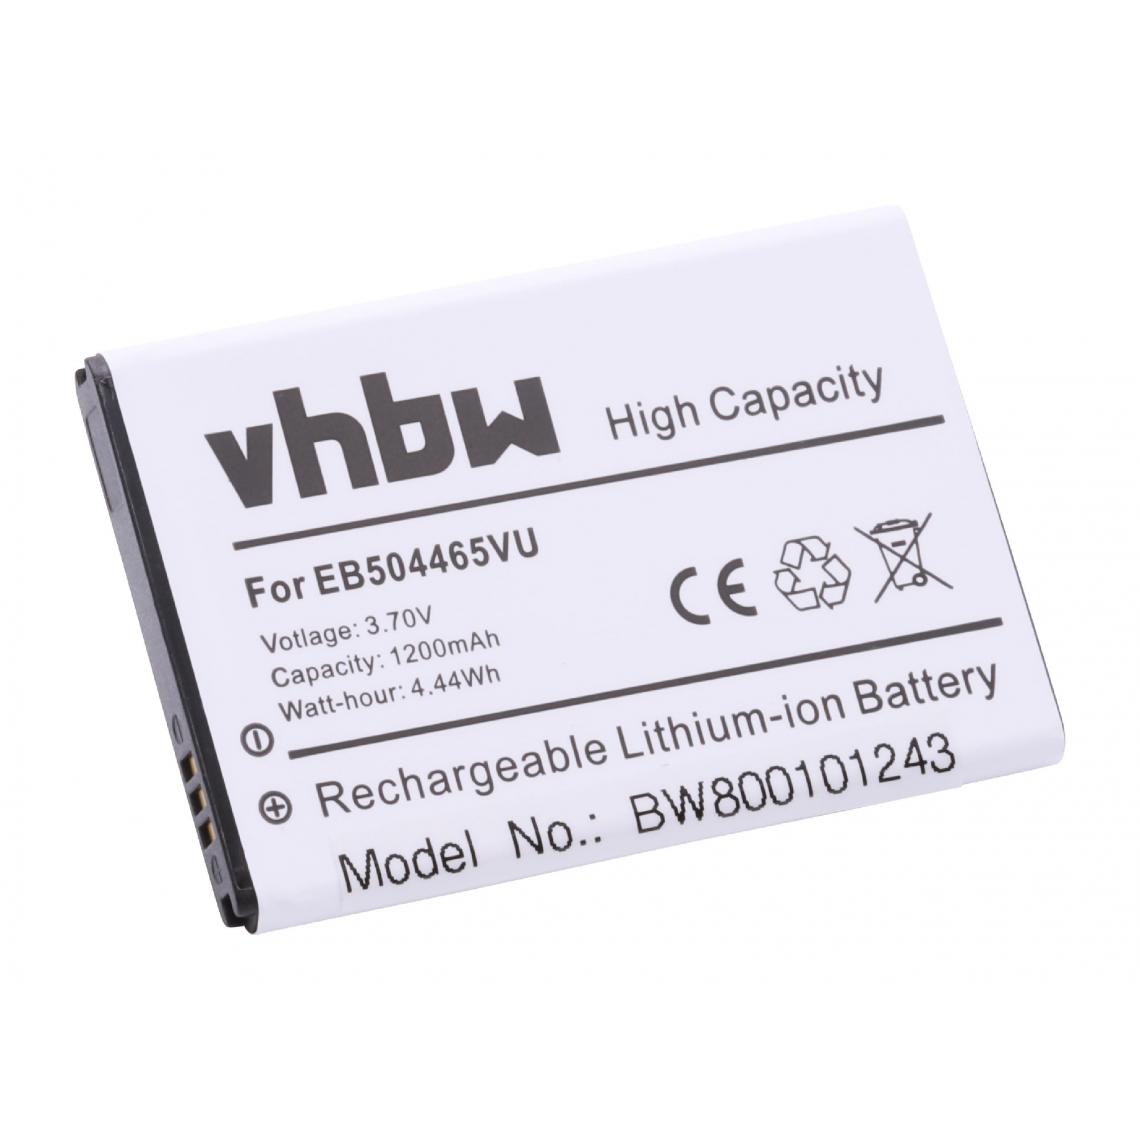 Vhbw - vhbw Batterie compatible avec Samsung Omnia Pro Giorgio Armani GT-B7300, Replenish M580, W smartphone (1200mAh, 3,7V, Li-ion) - Batterie téléphone